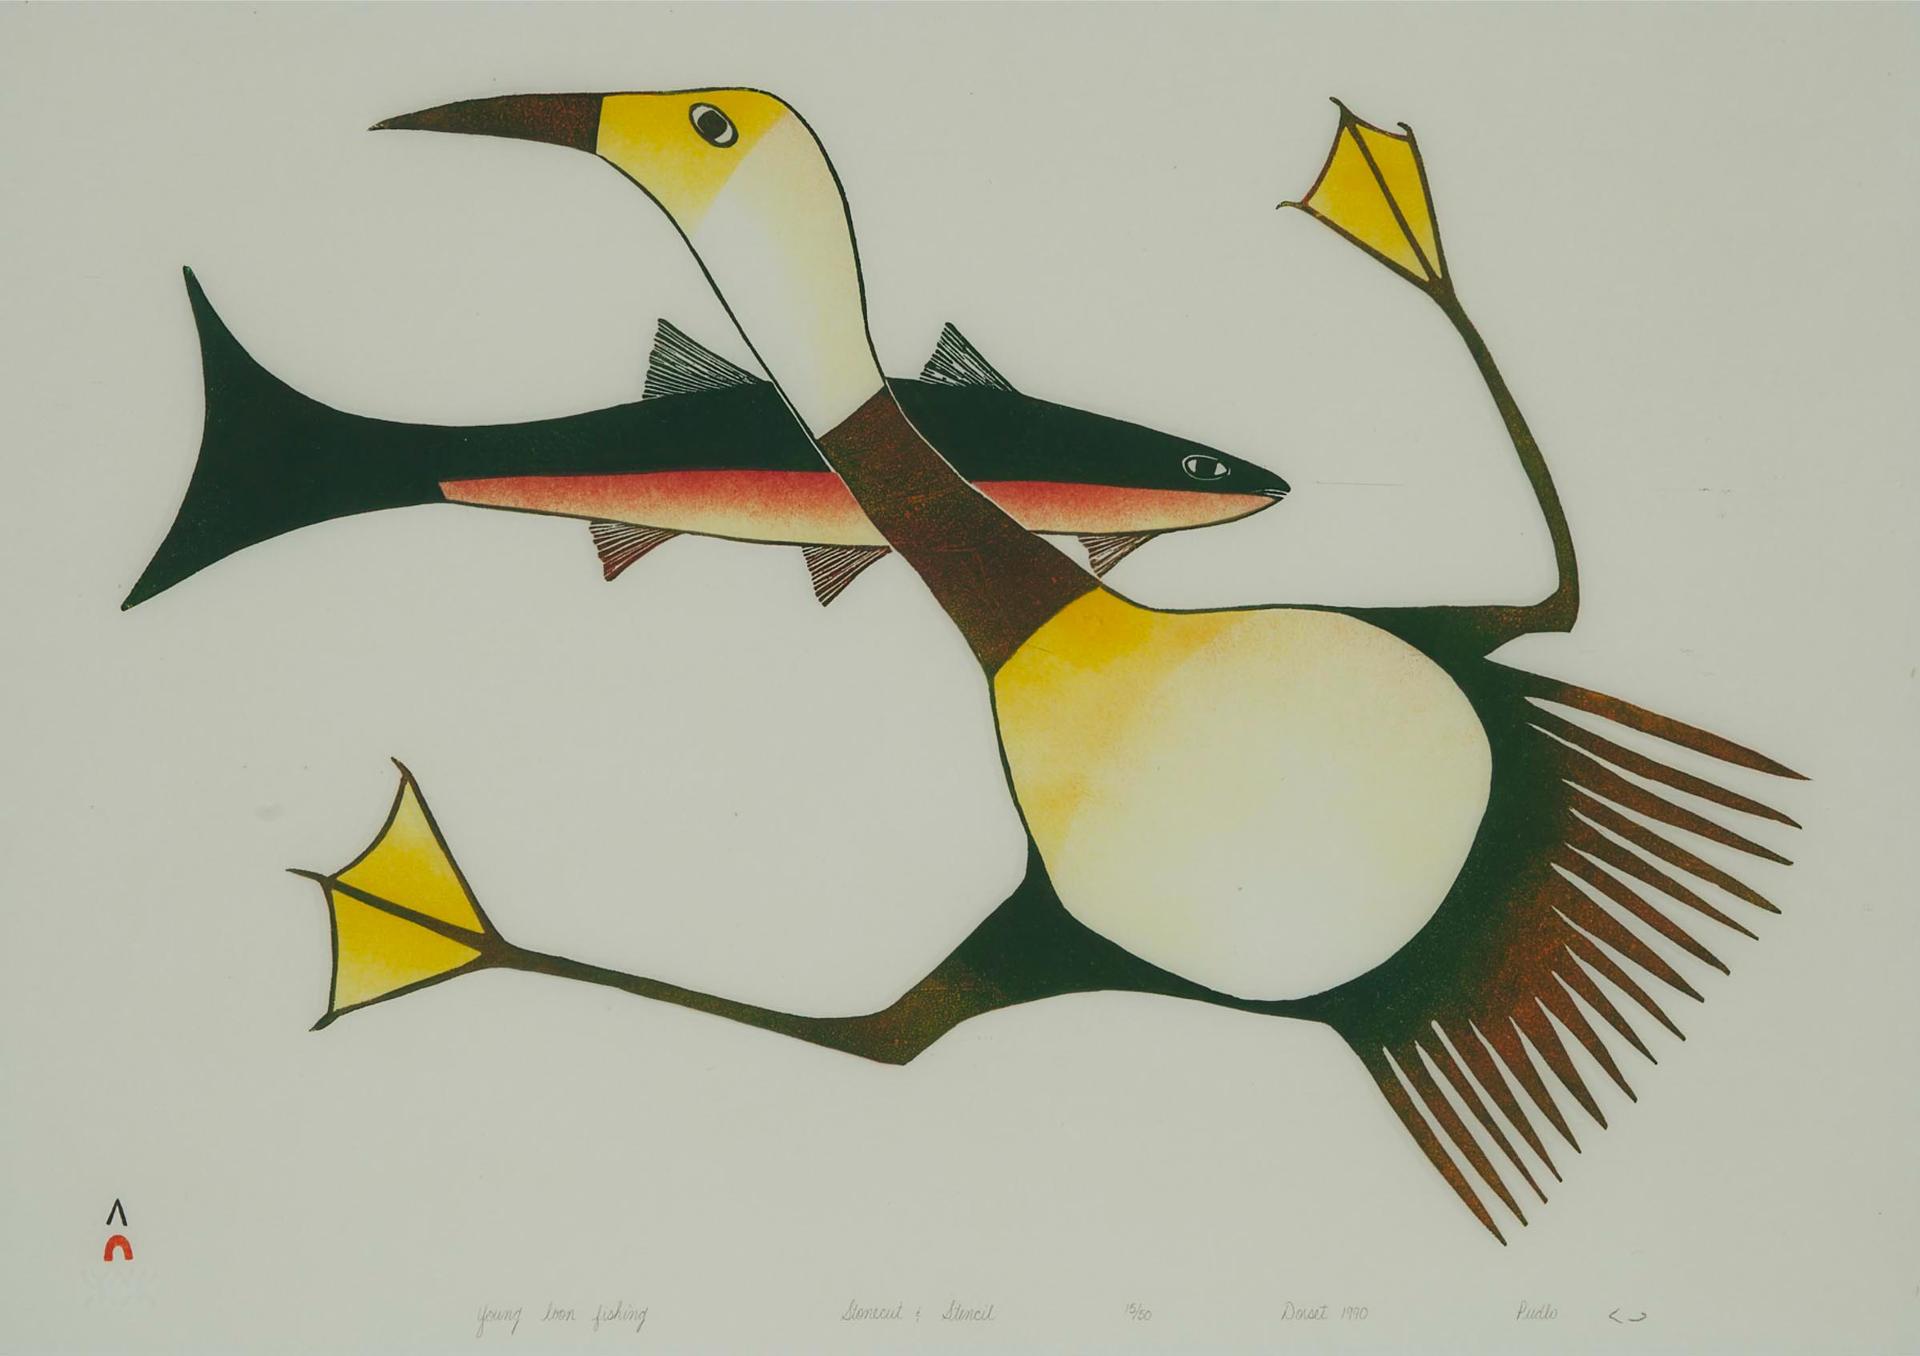 Pudlo Pudlat (1916-1992) - Young Loon Fishing